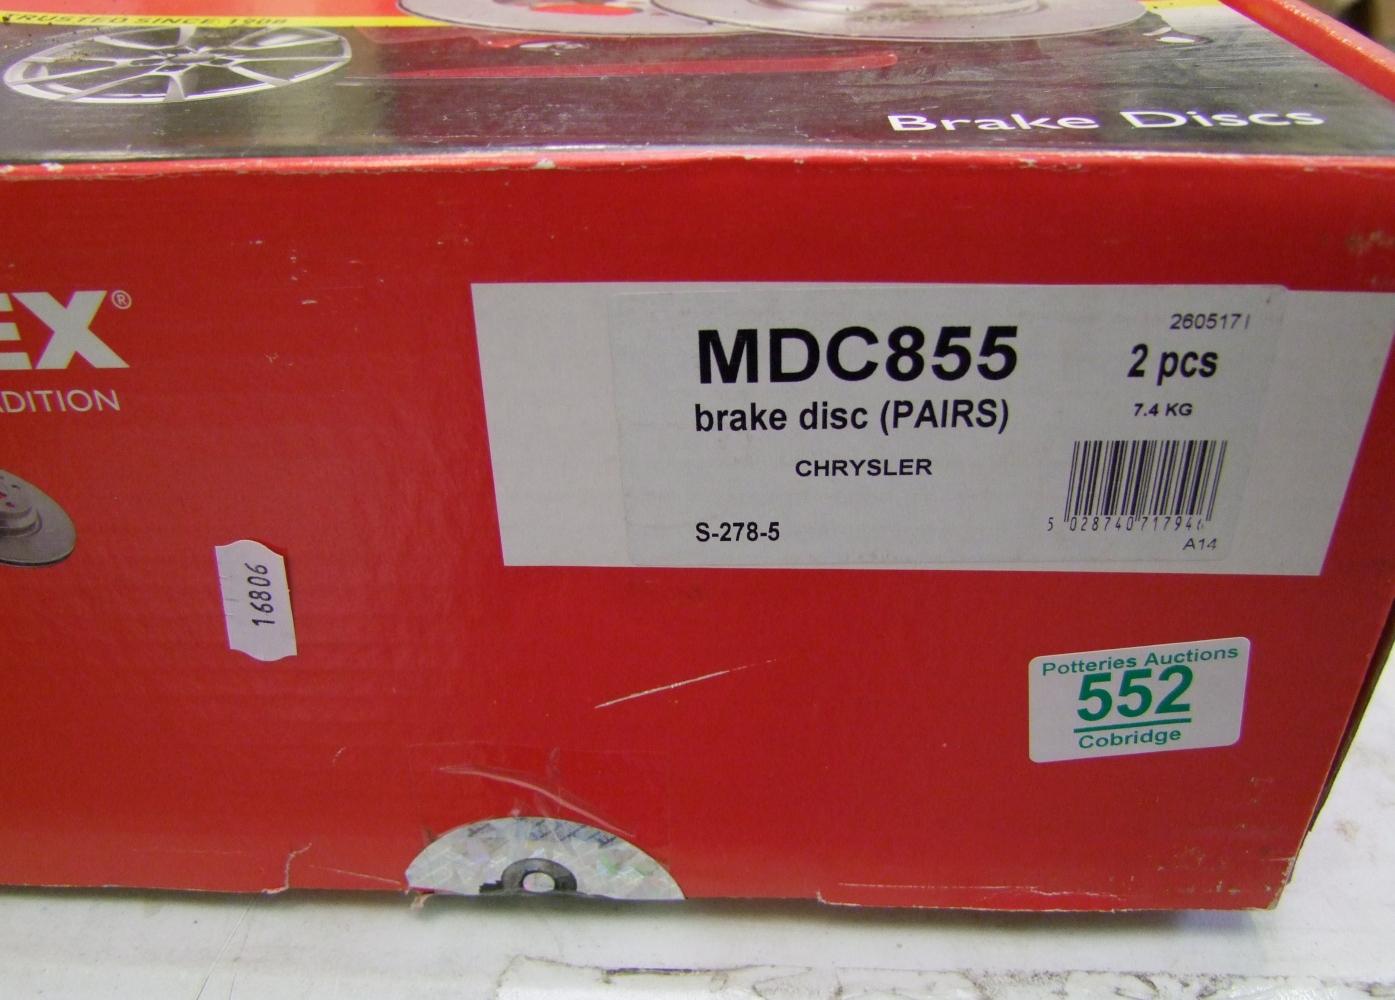 Mintex pair of brake discs: Chrysler MDC855.